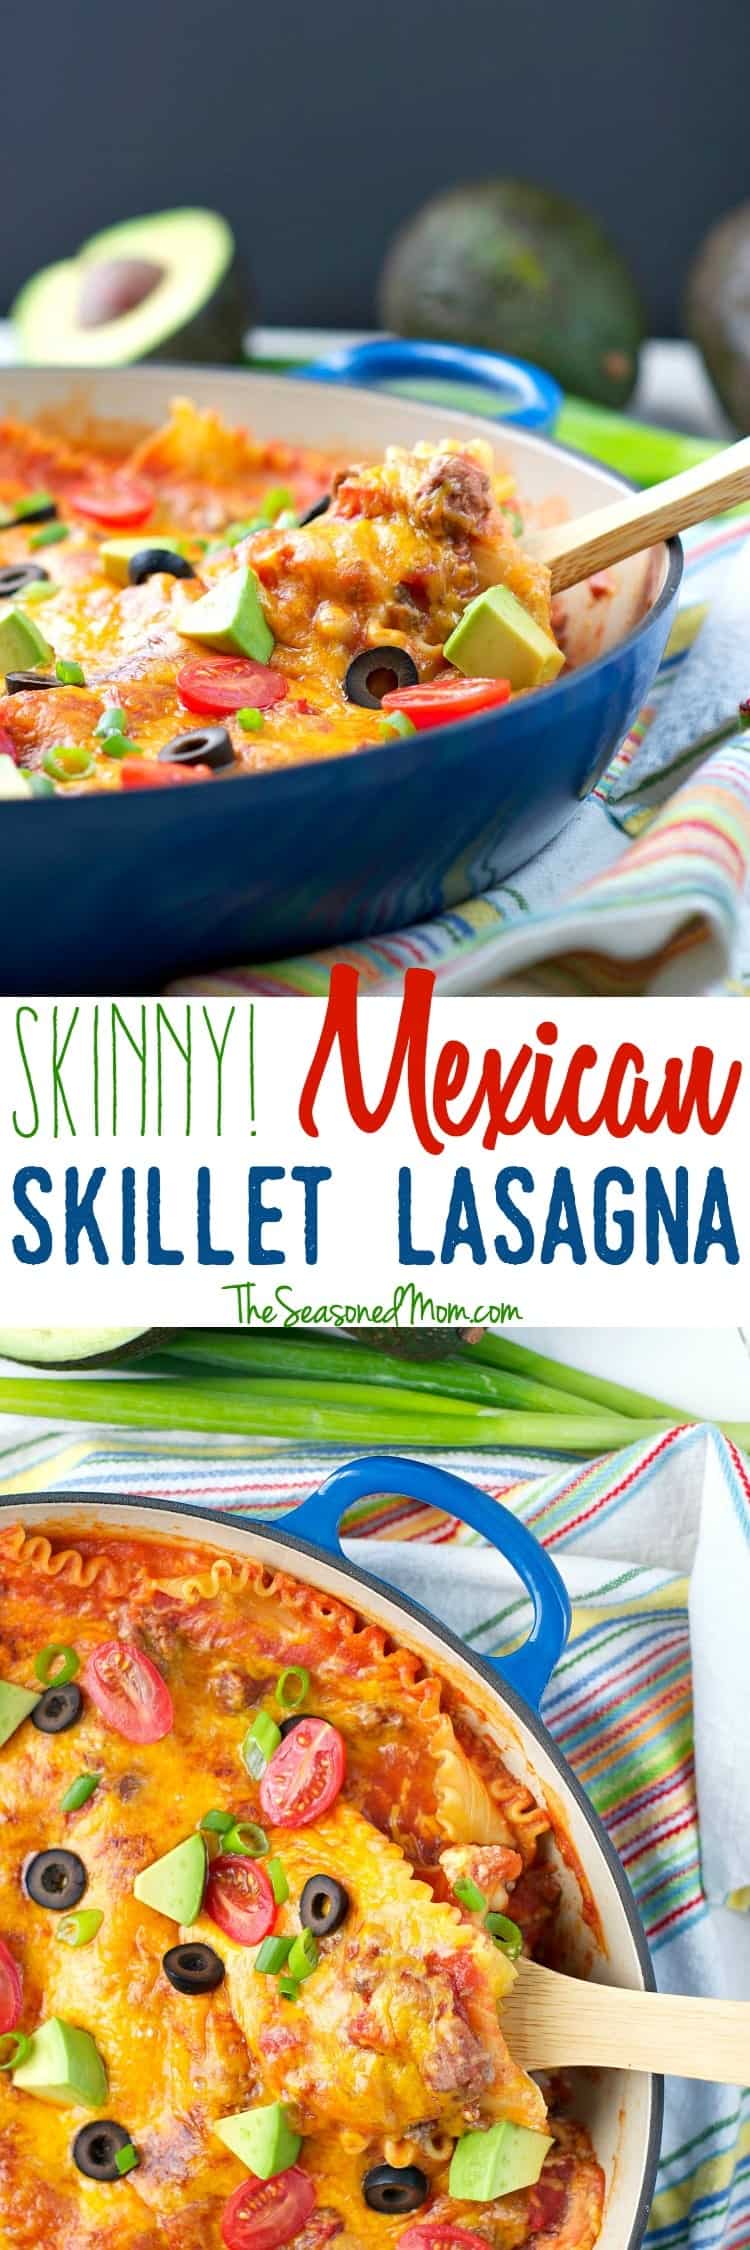 Skinny Mexican Skillet Lasagna - The Seasoned Mom